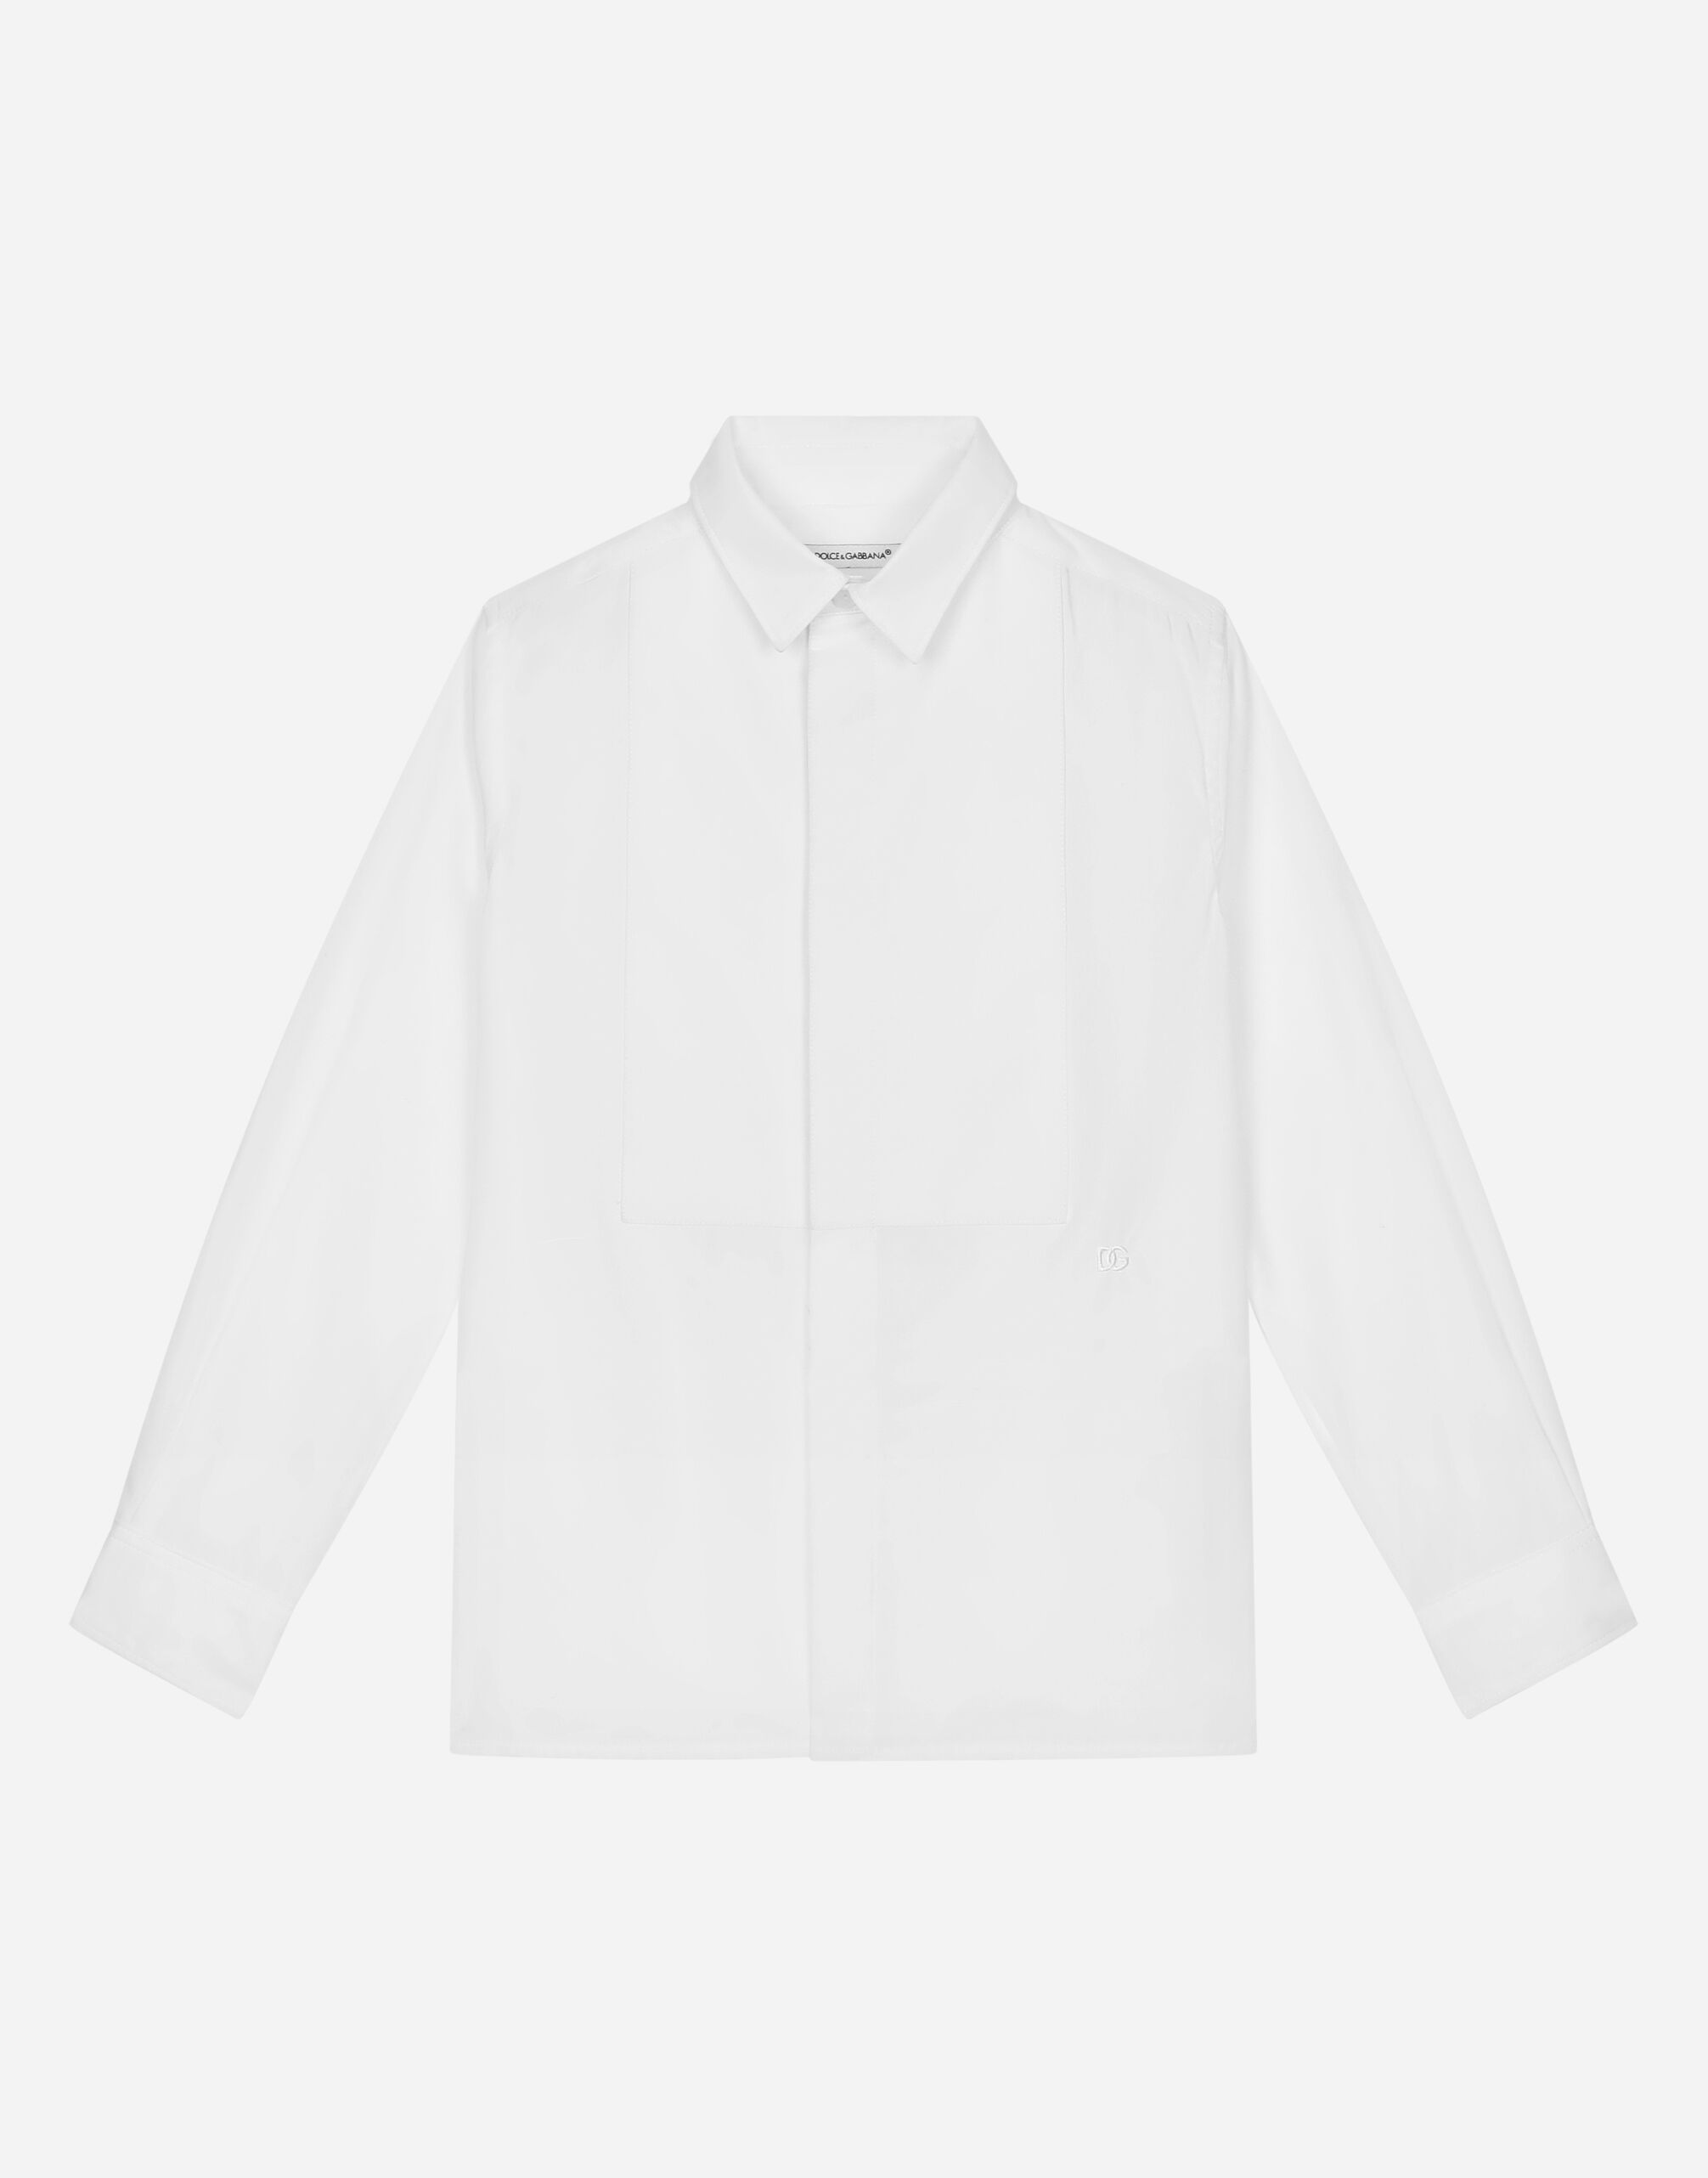 Dolce & Gabbana Poplin jacquard tuxedo shirt with DG logo Print L43S86G7L5W